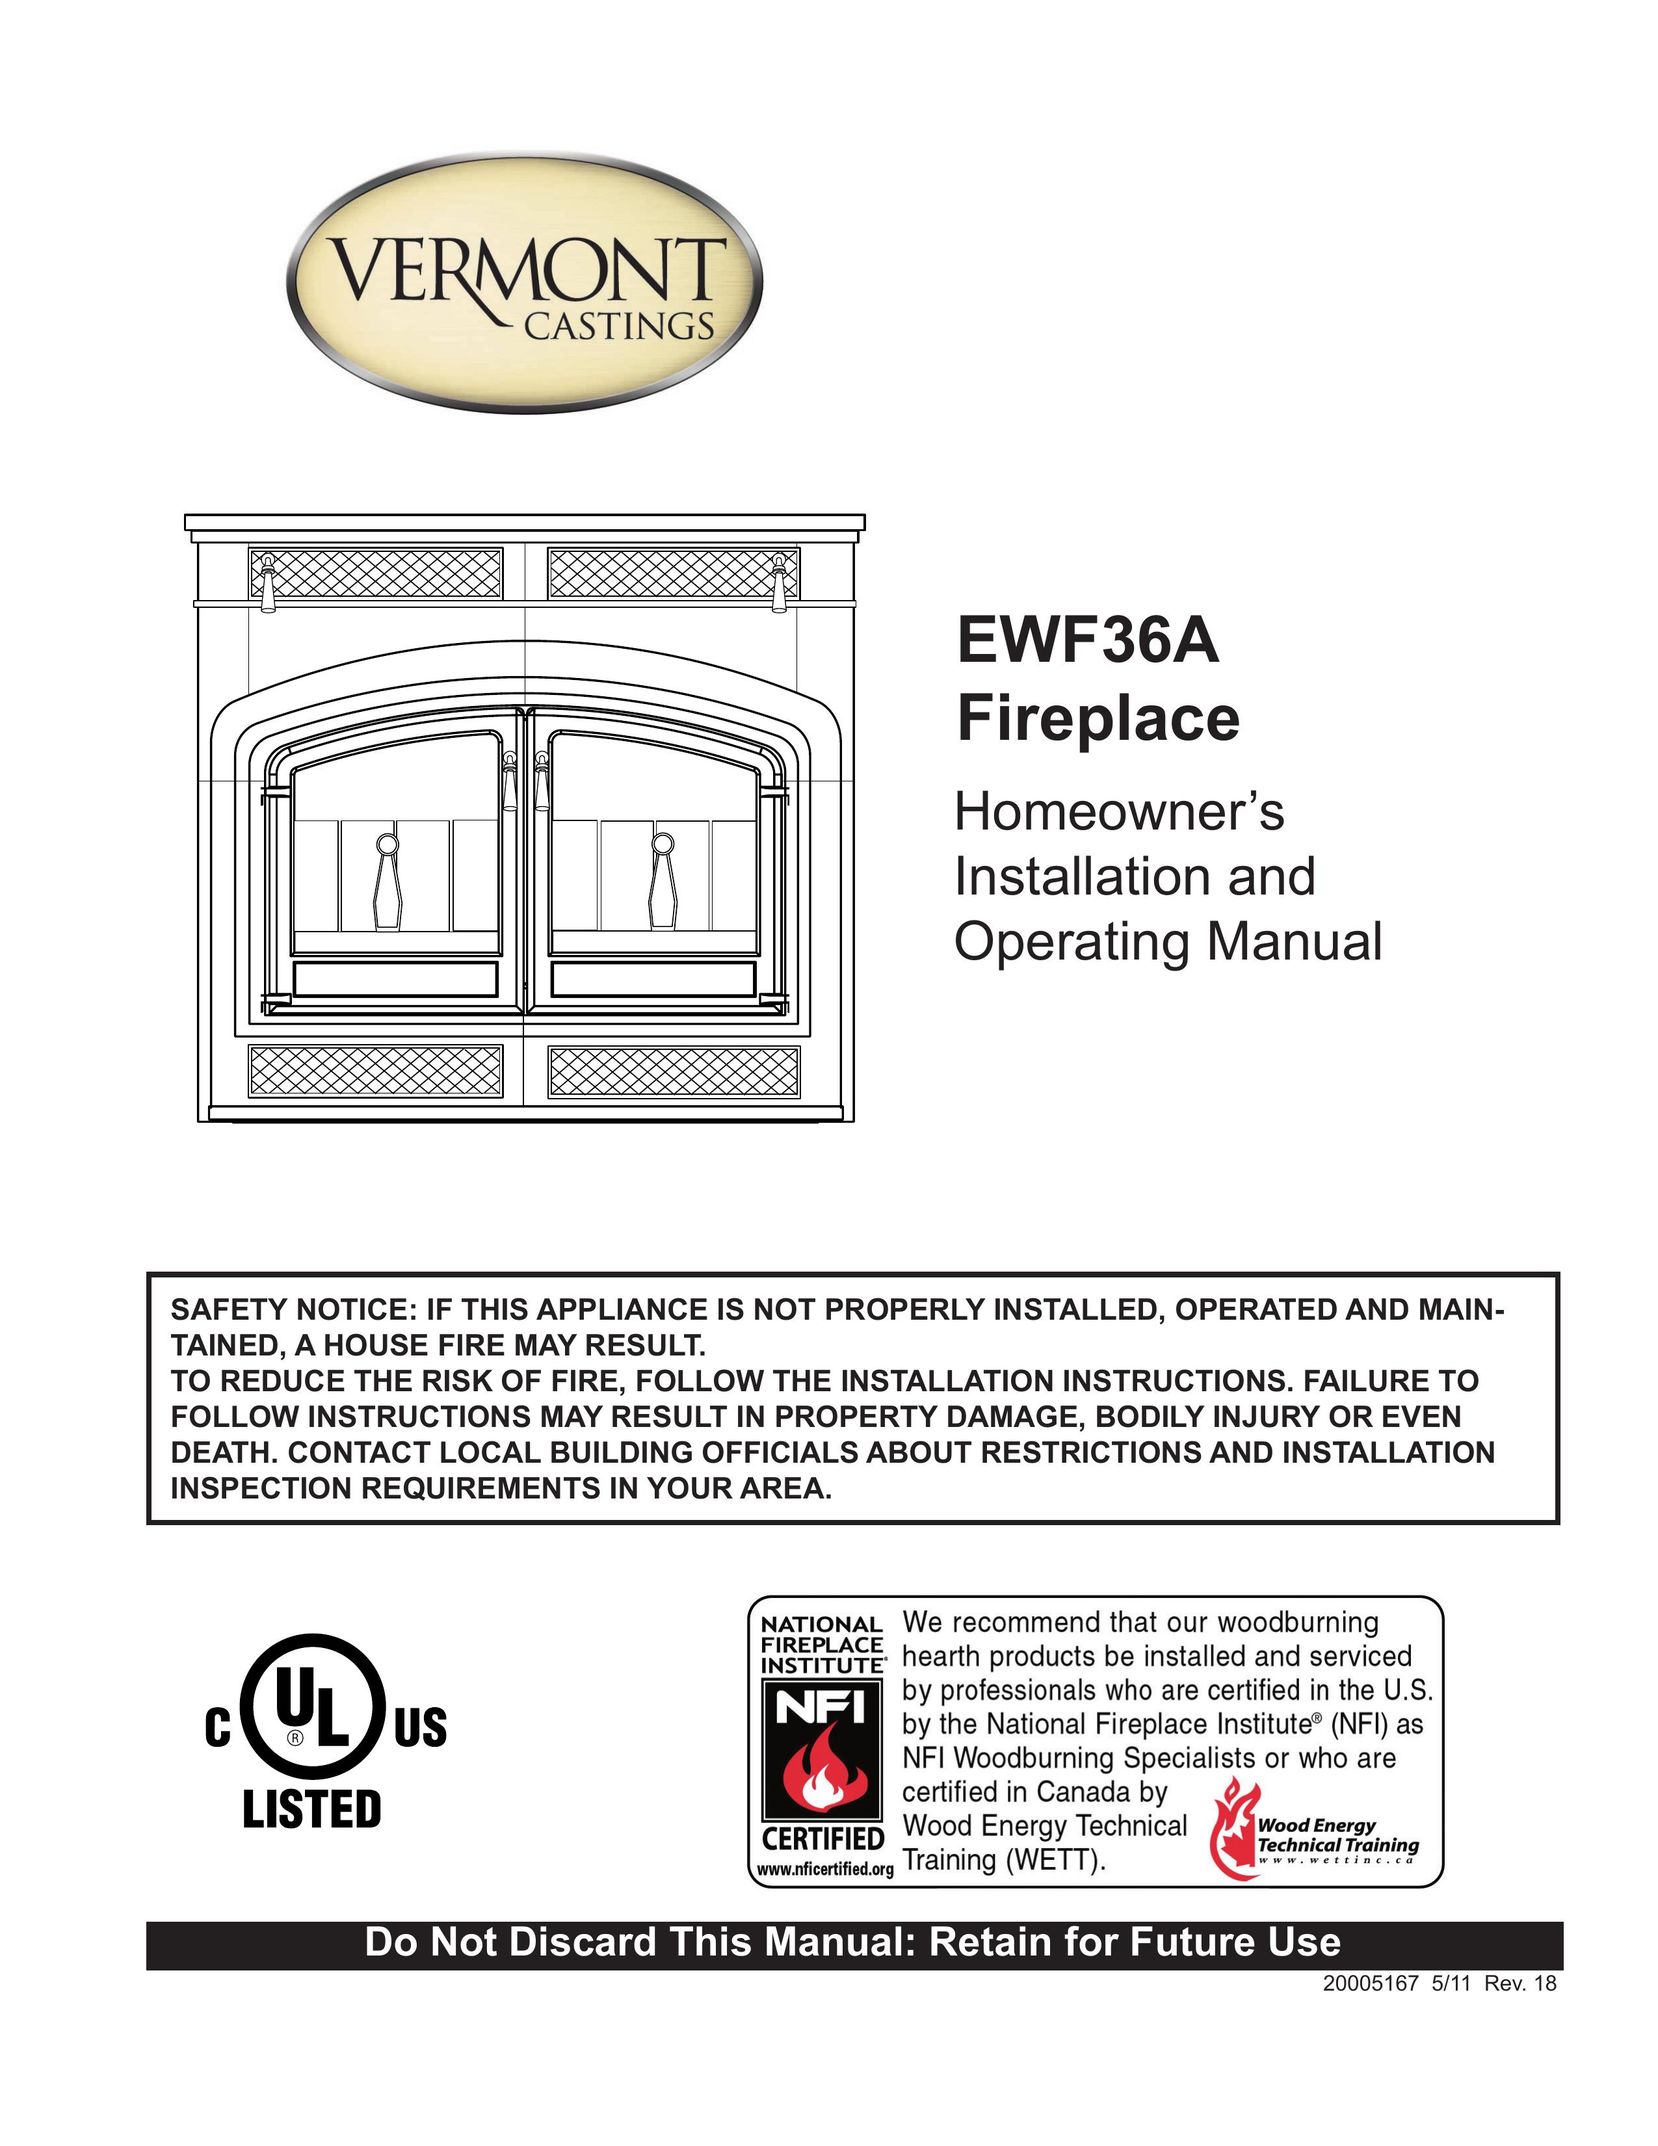 MHP EWF36A Indoor Fireplace User Manual